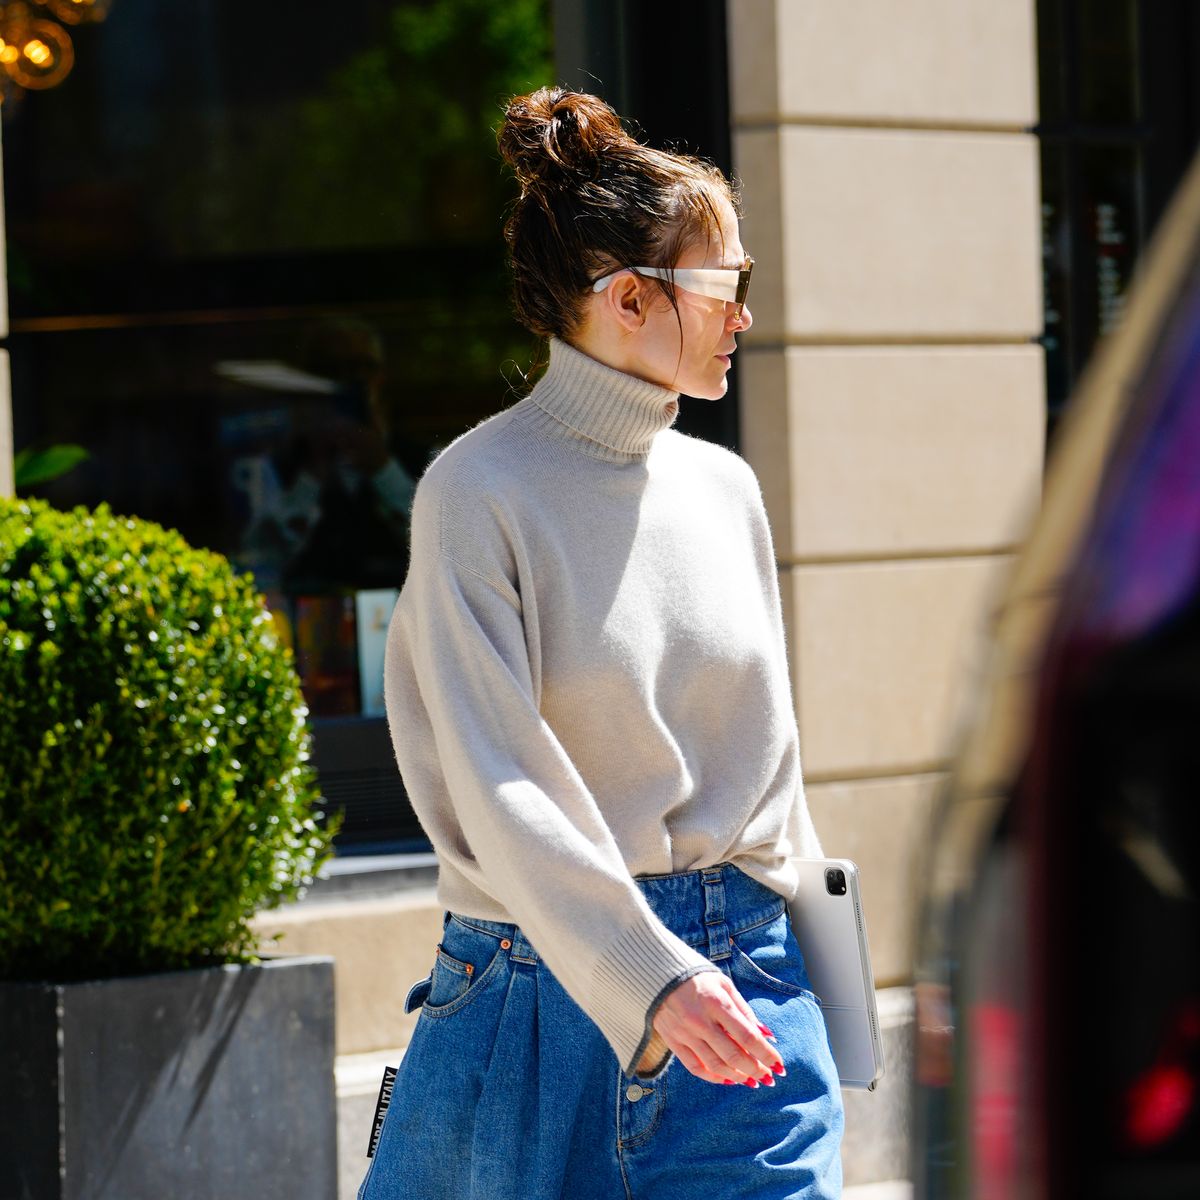 jennifer lopez in new york city wearing oversize gucci jeans and a light grey turtleneck